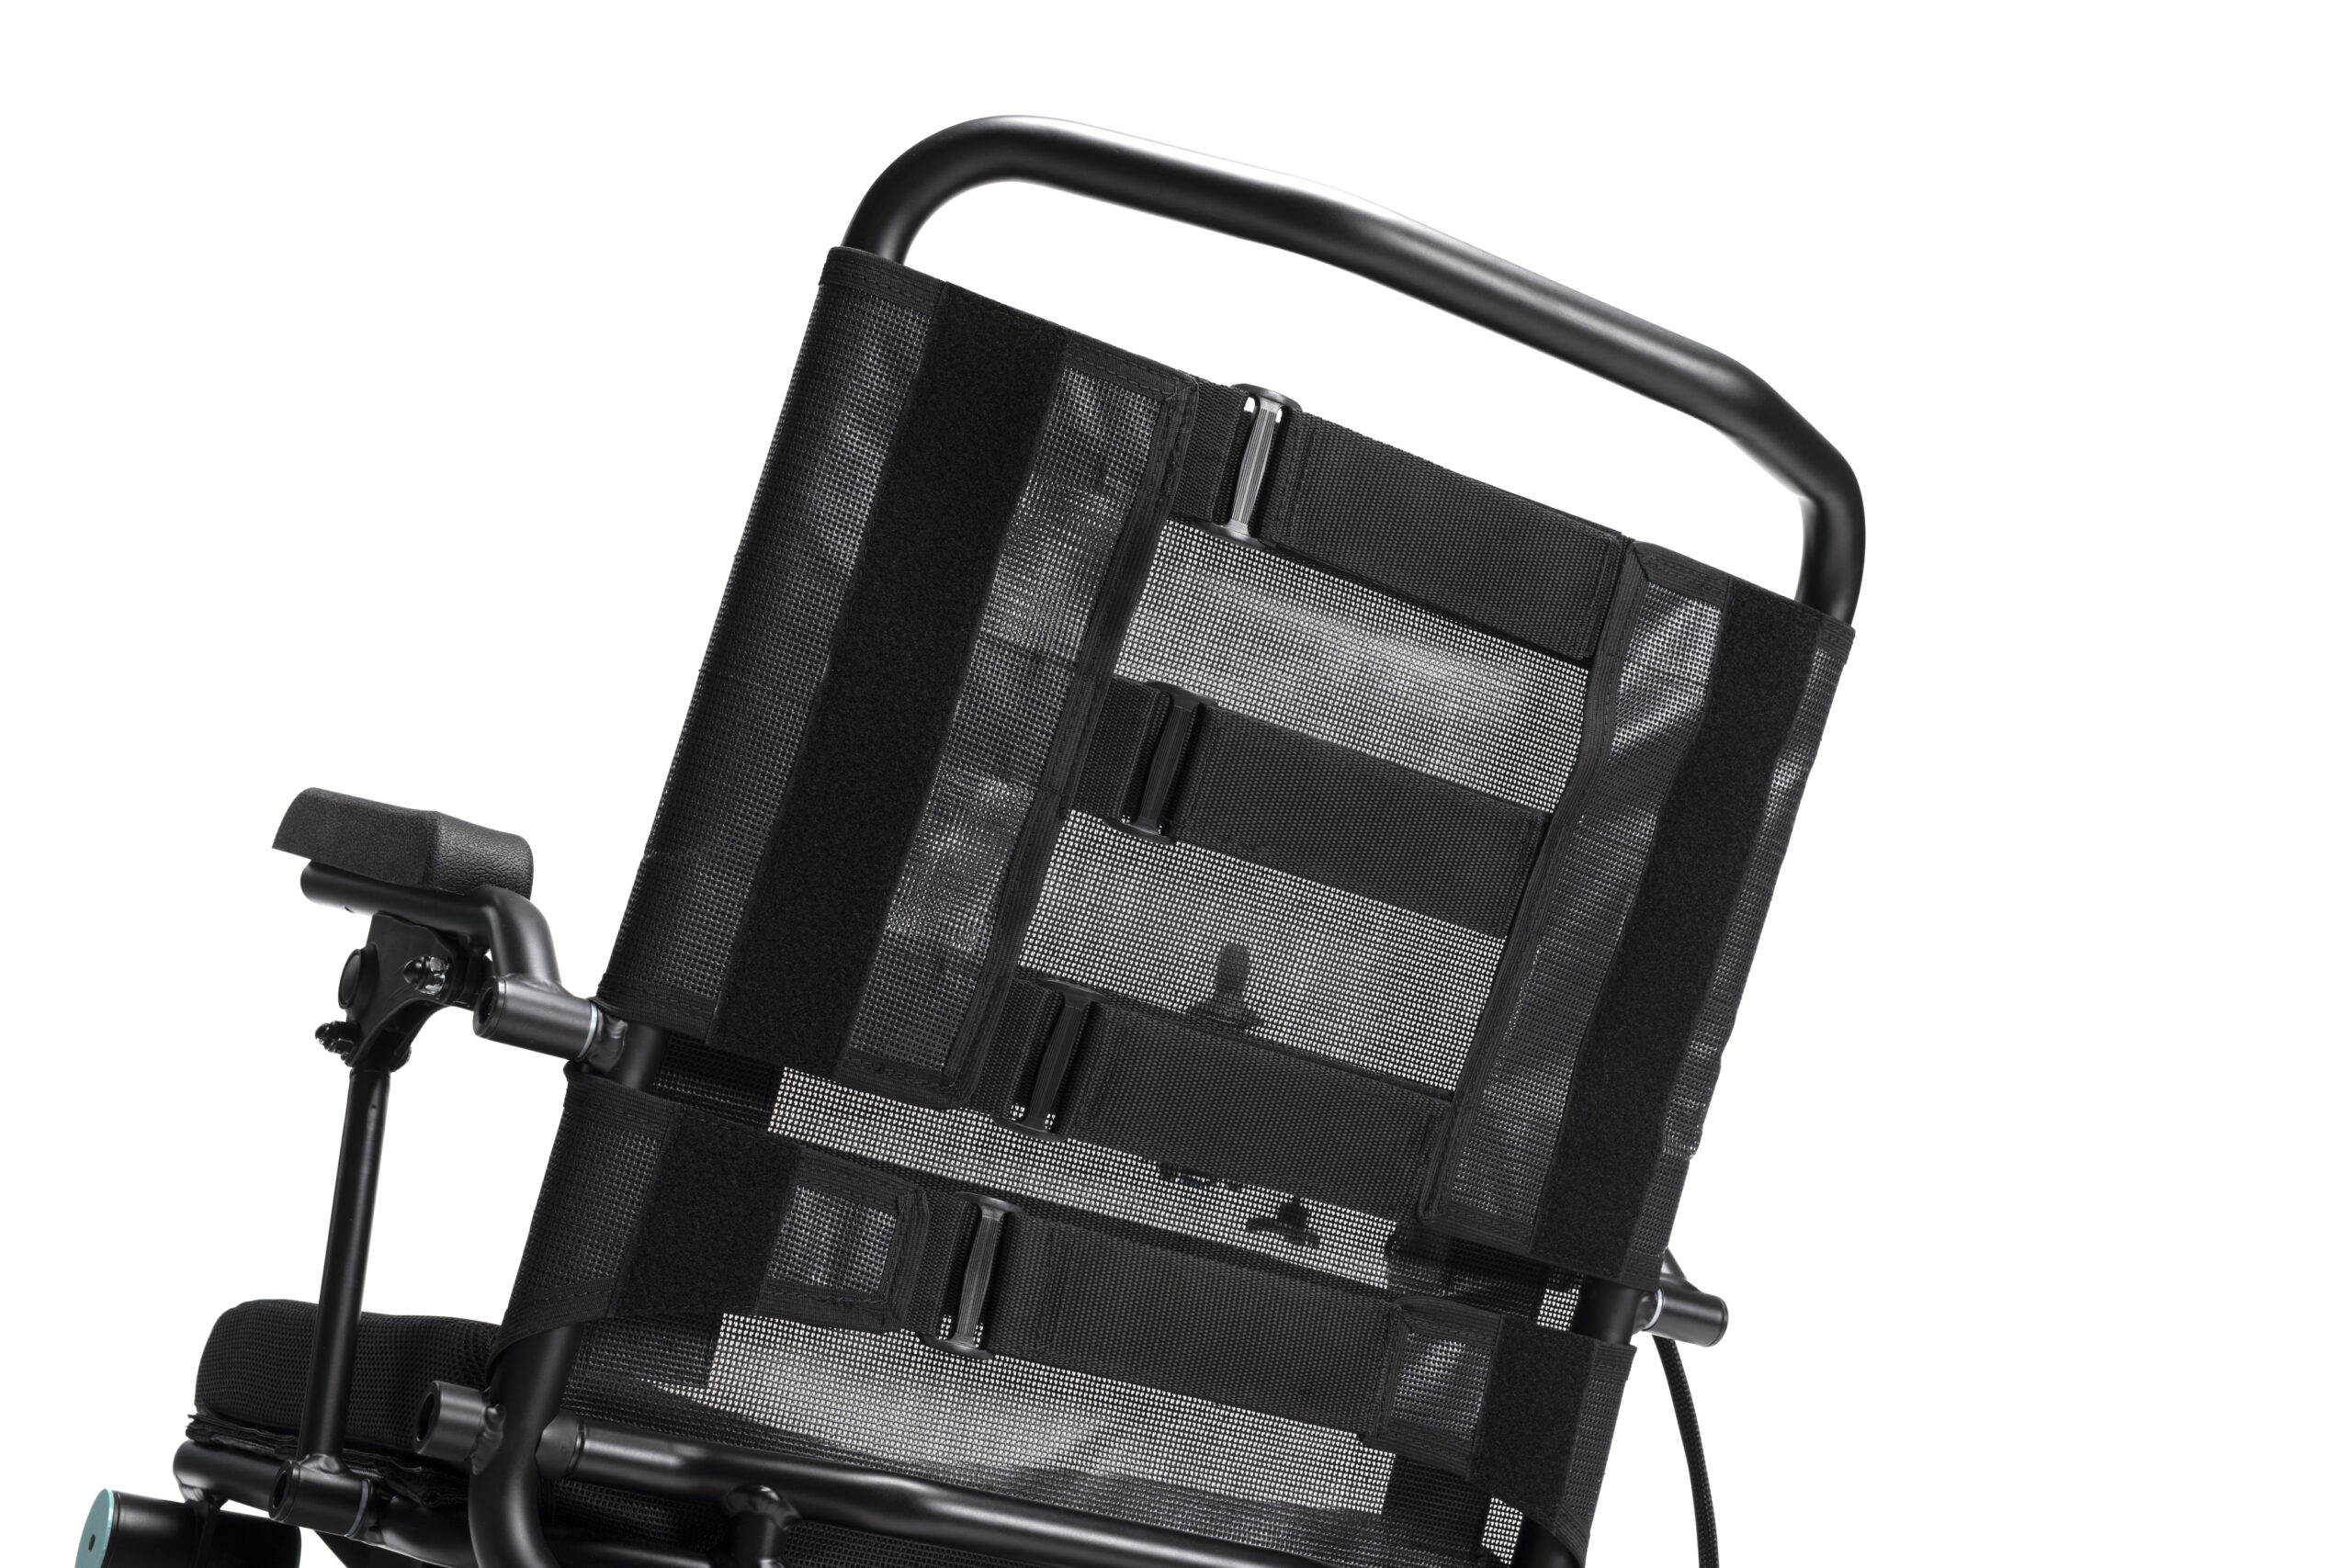 Foldable Lightweight Powered Wheelchair Plego Vermeiren